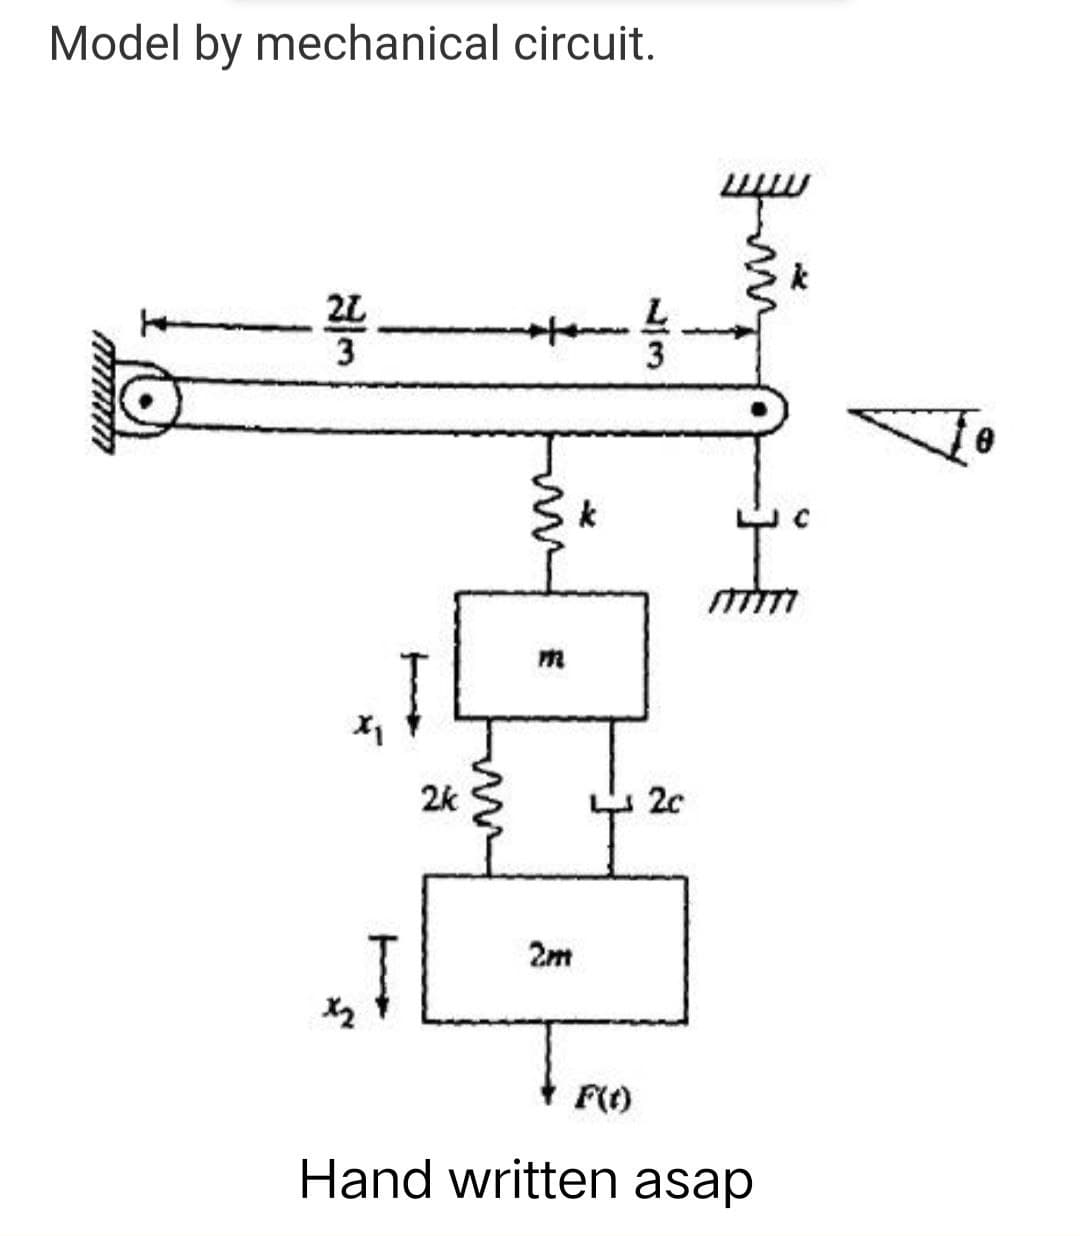 Model by mechanical circuit.
2L
2/13
X₁
Ammin
2k
E
2m
k
113
2c
k
777777
x₂
F(t)
Hand written asap